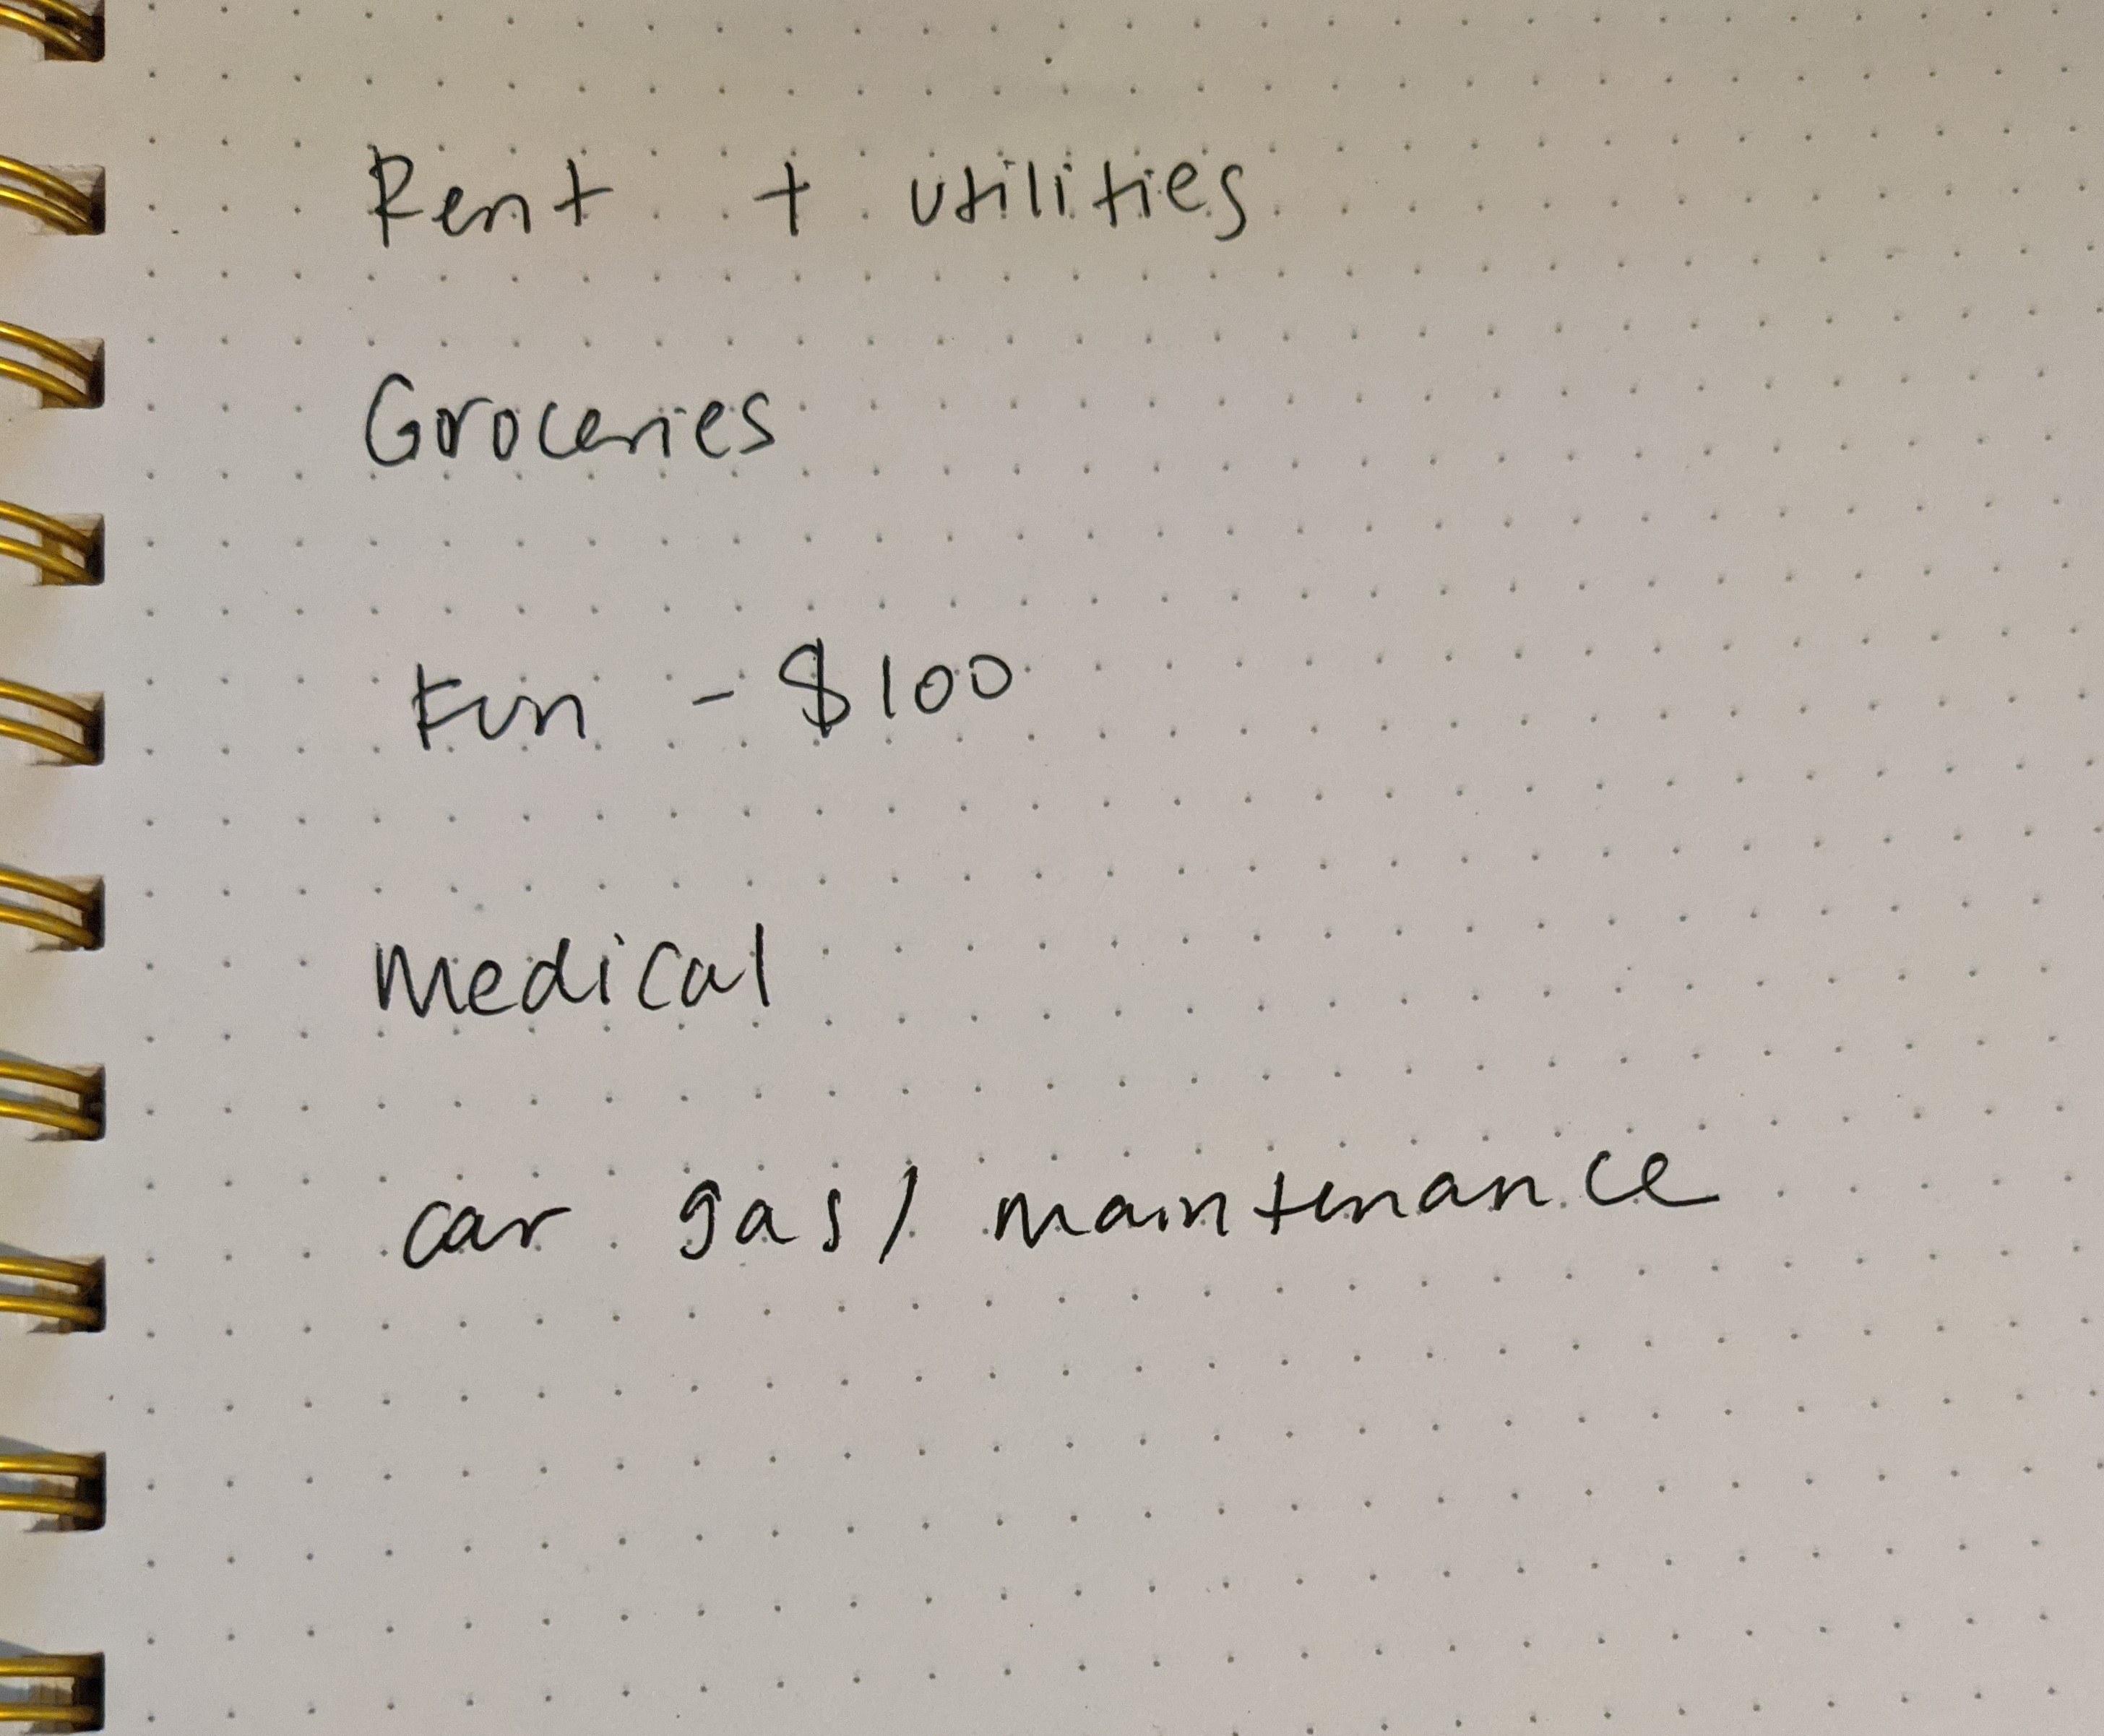 Budget written on paper